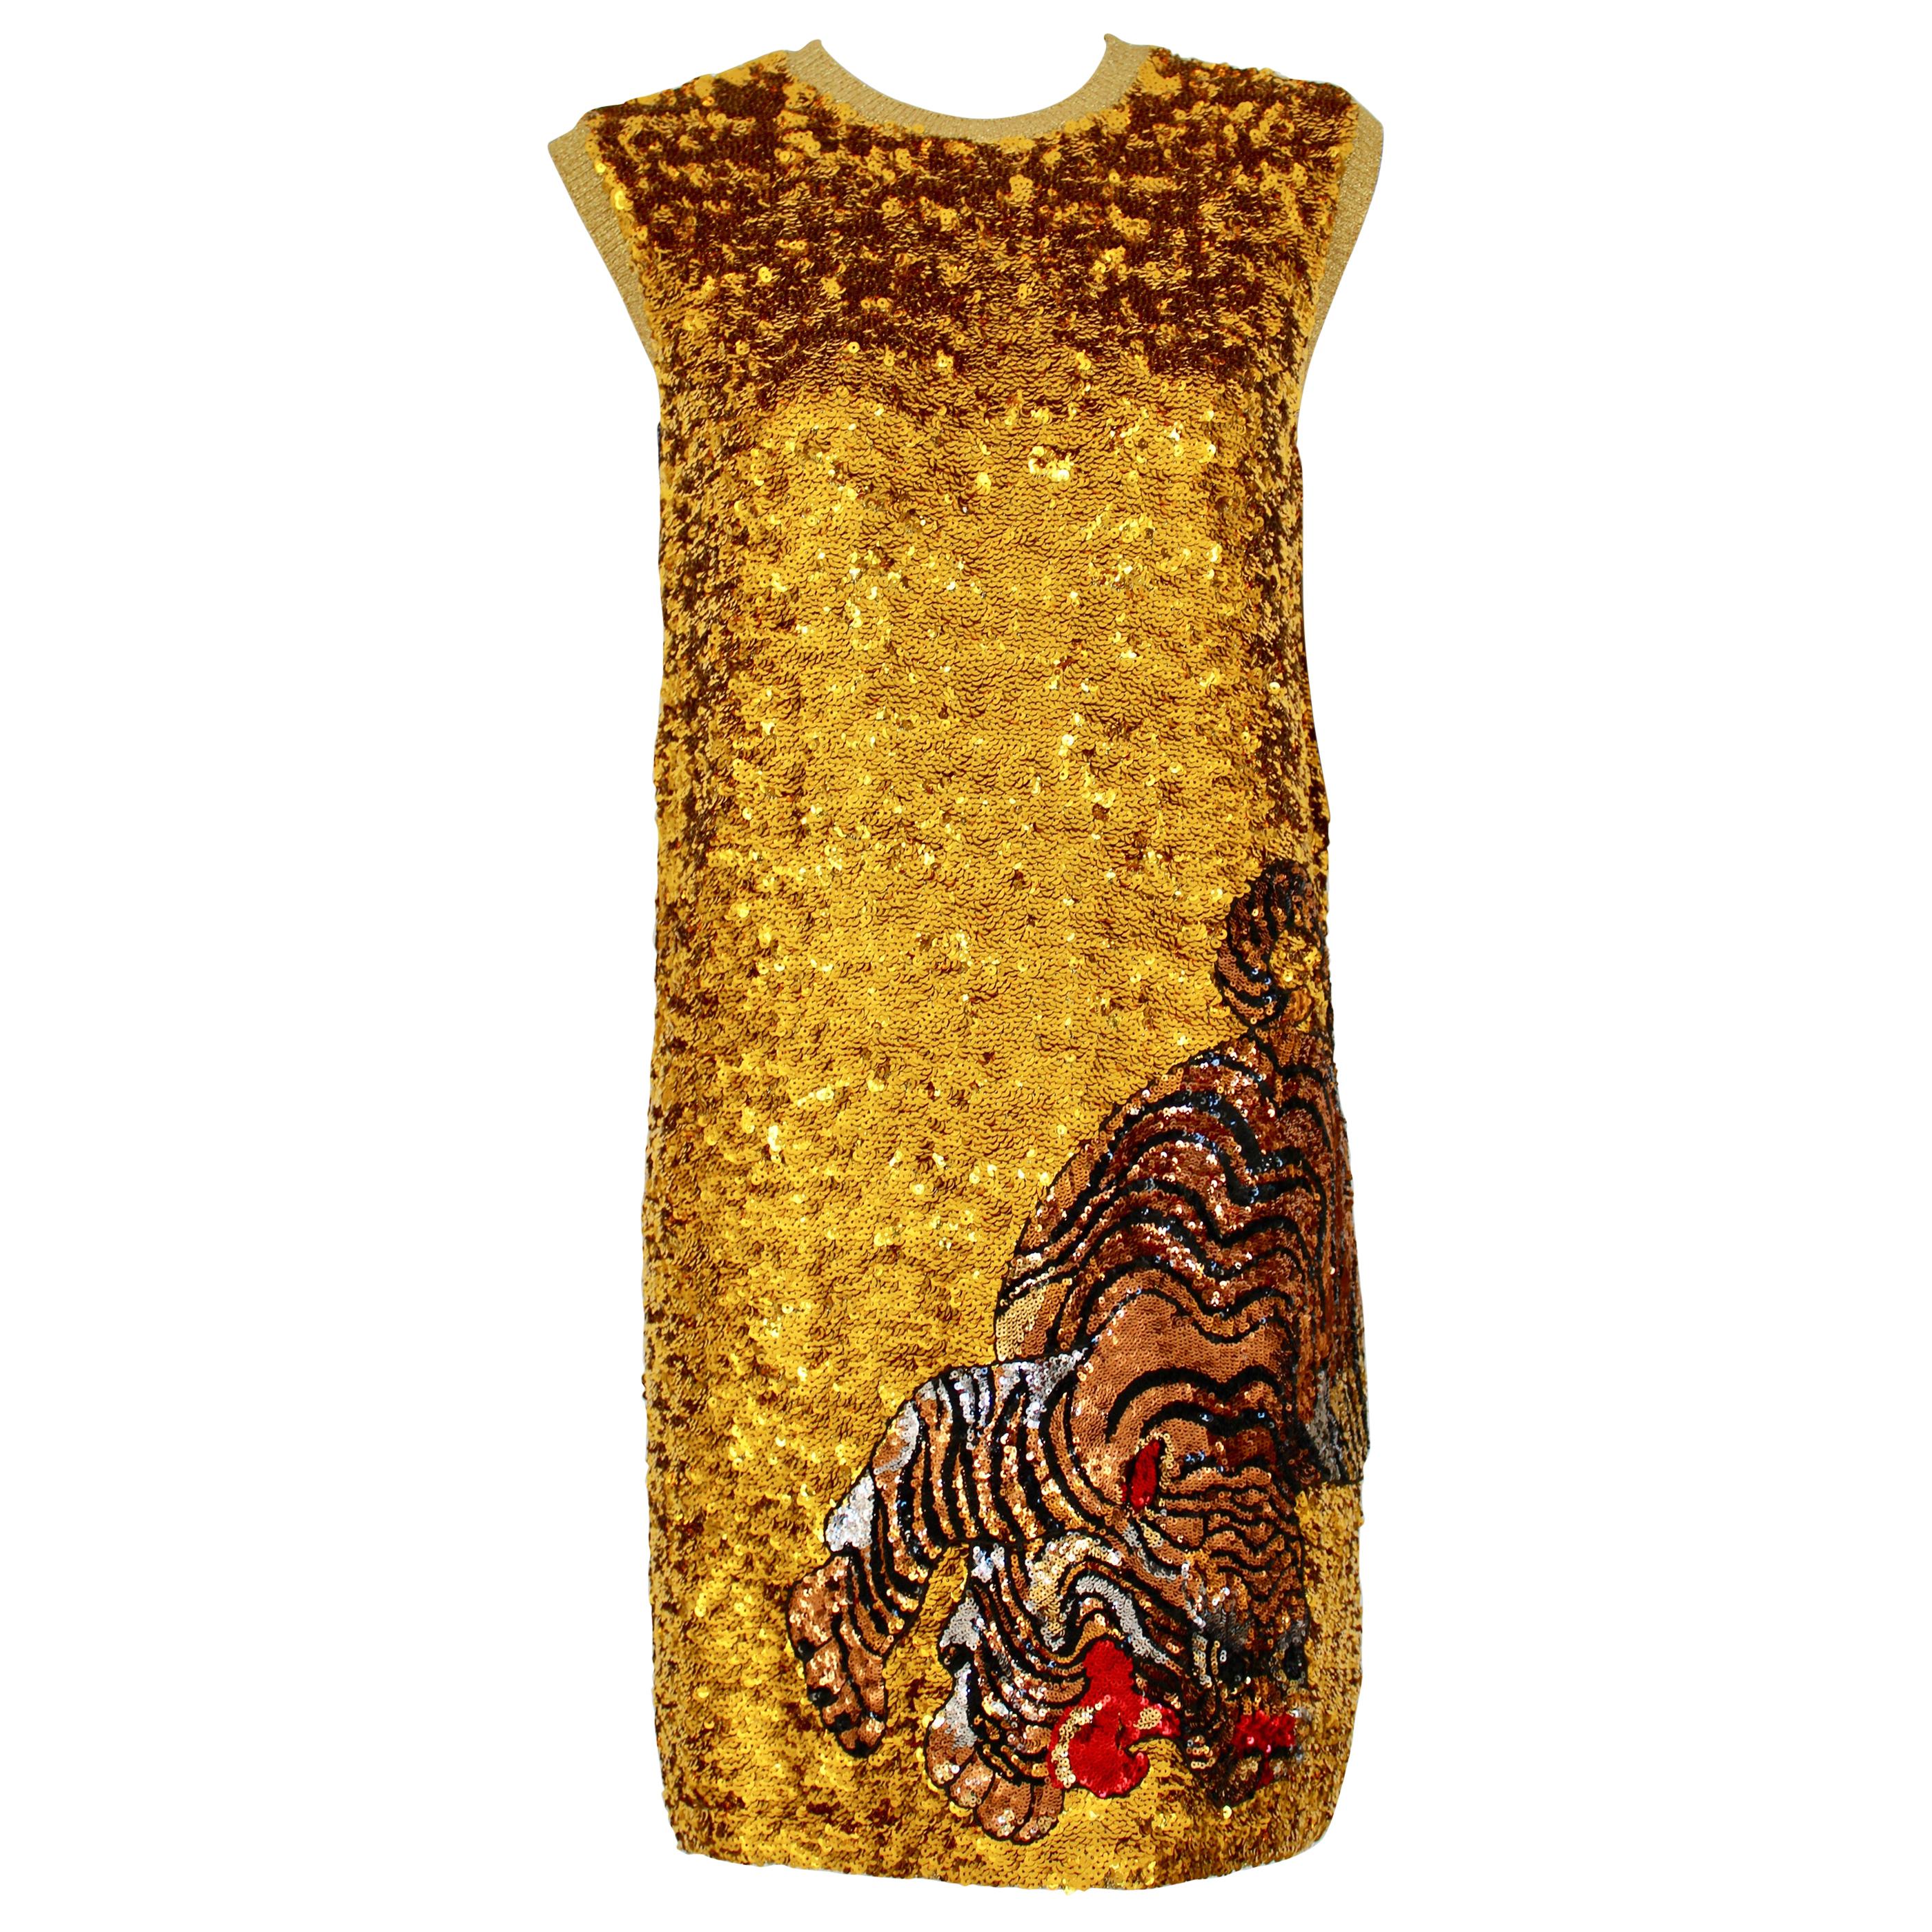 RARE Gucci Gold Sequin dress For Sale ...